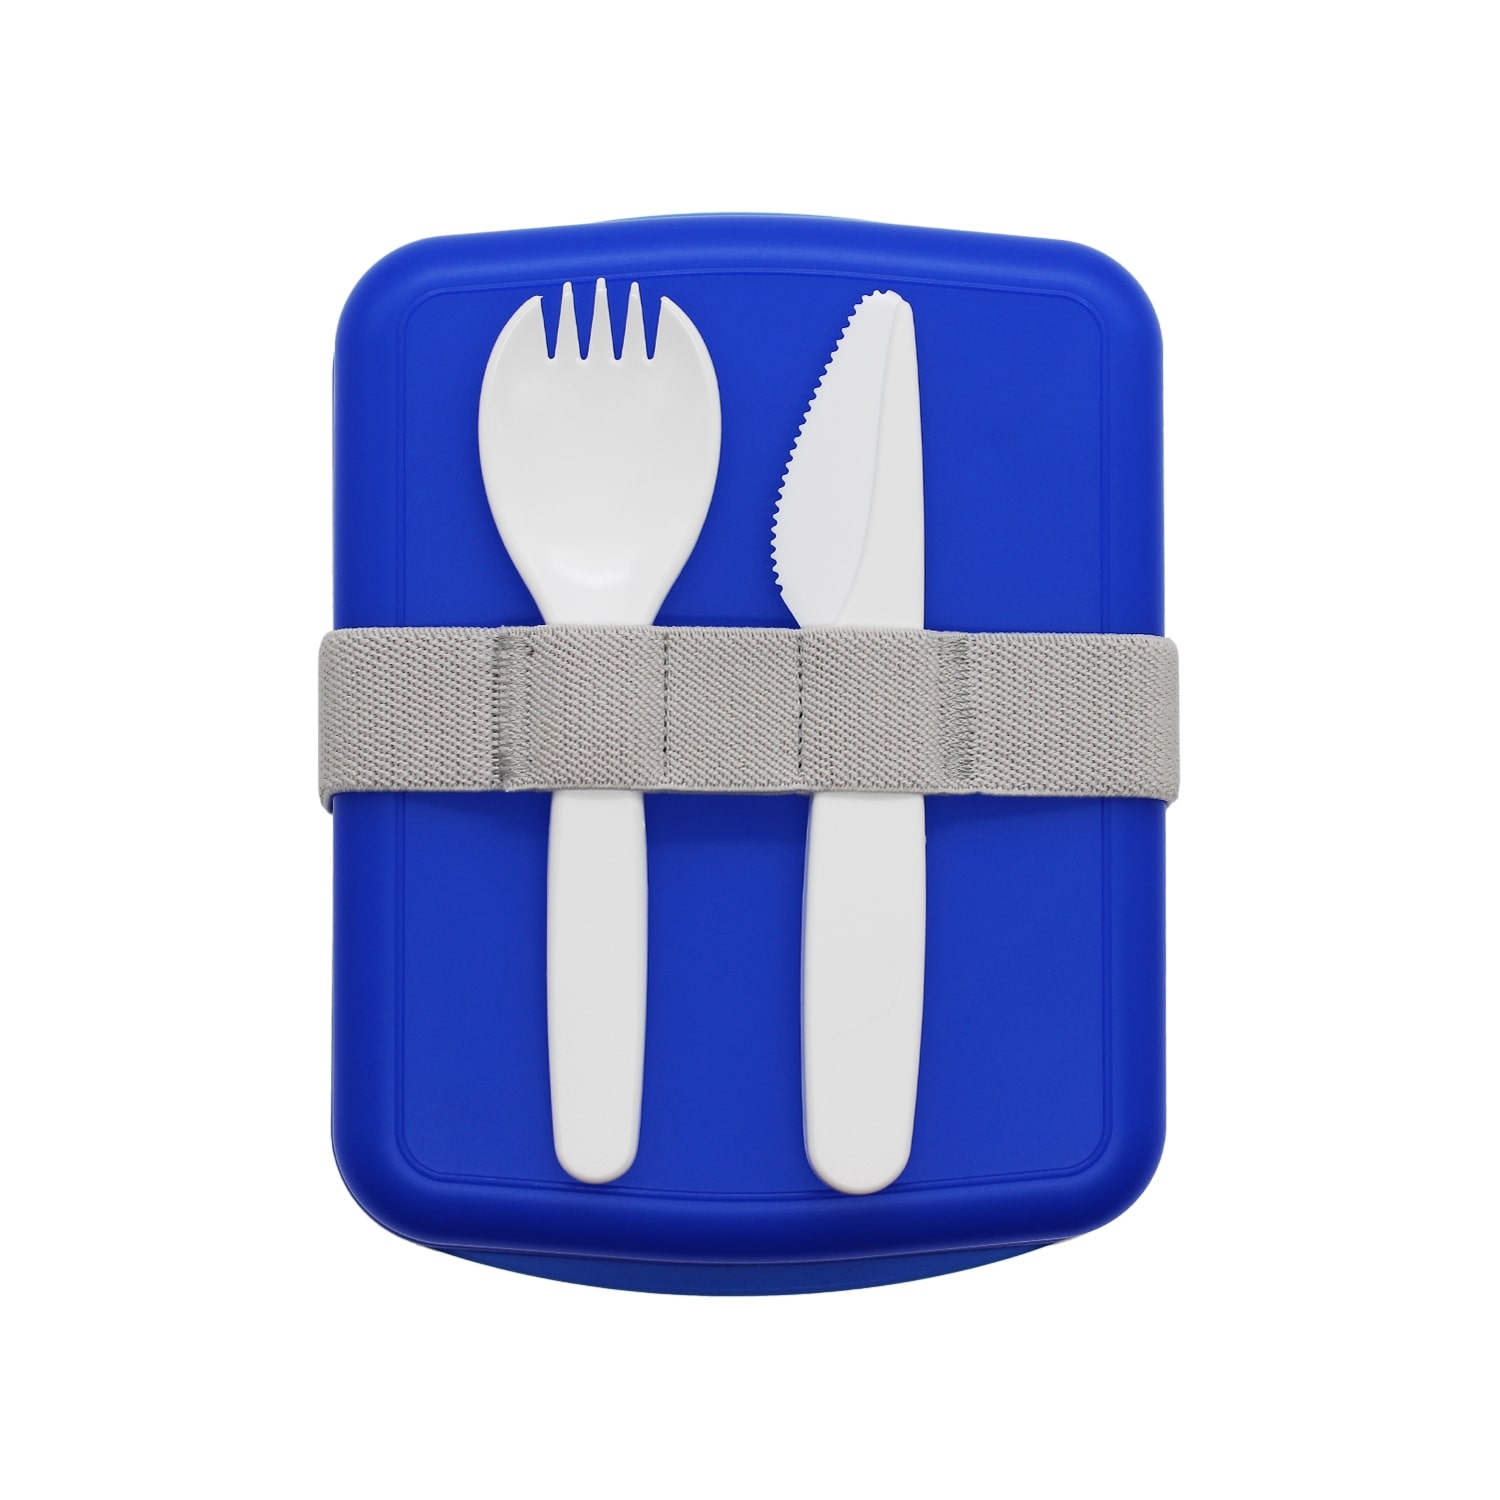 Ланч-бокс Lunch Blue line со столовыми приборами (синий), синий, пластик